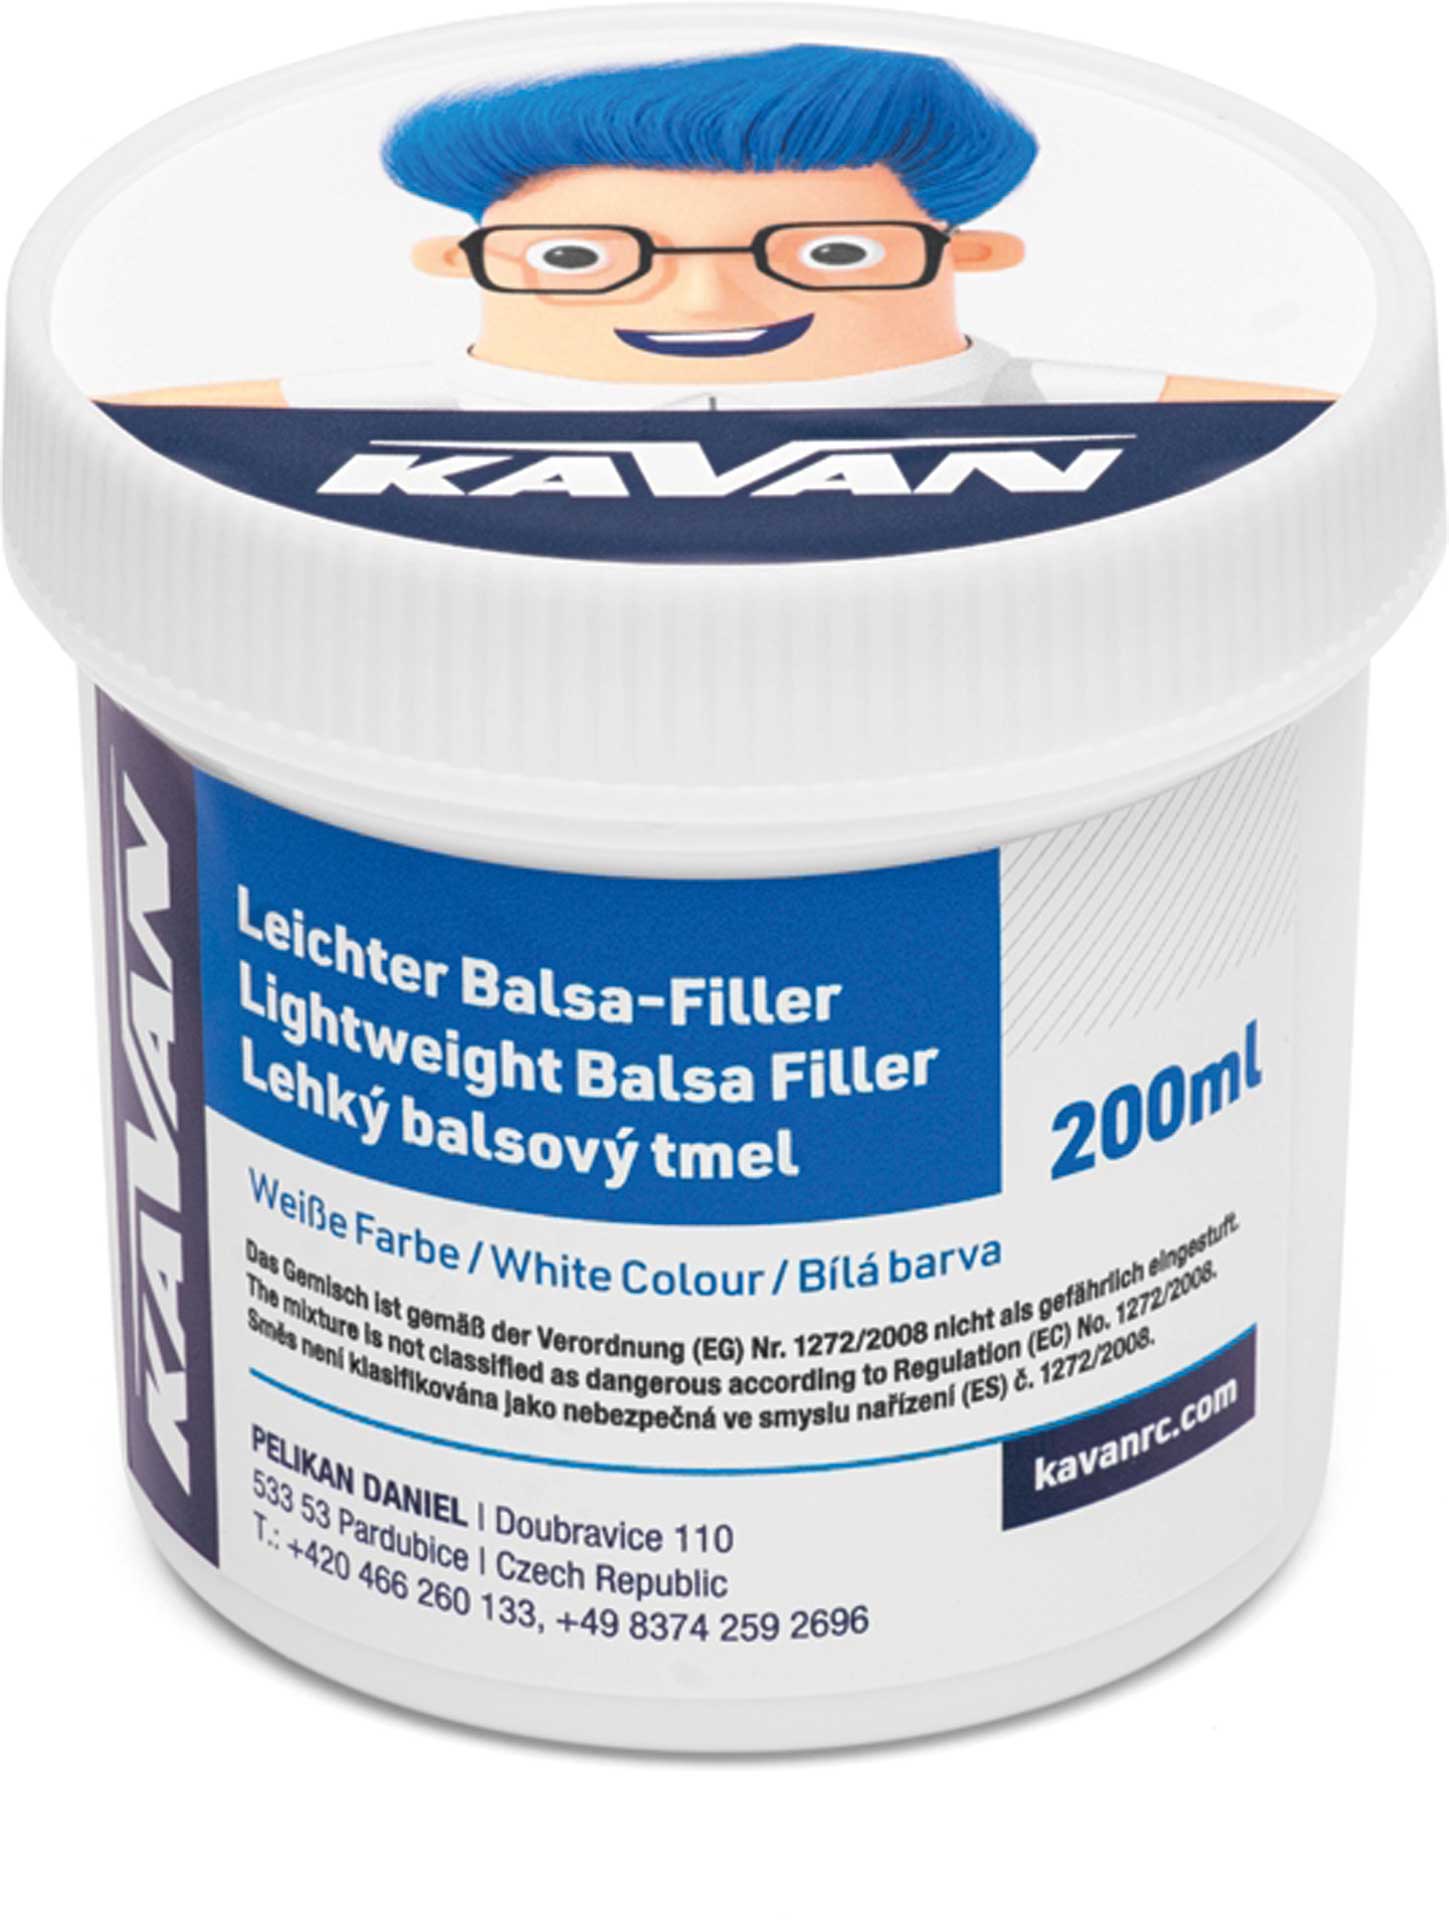 Kavan Balsa-Filler 200ml - weiß (DE Etikette)